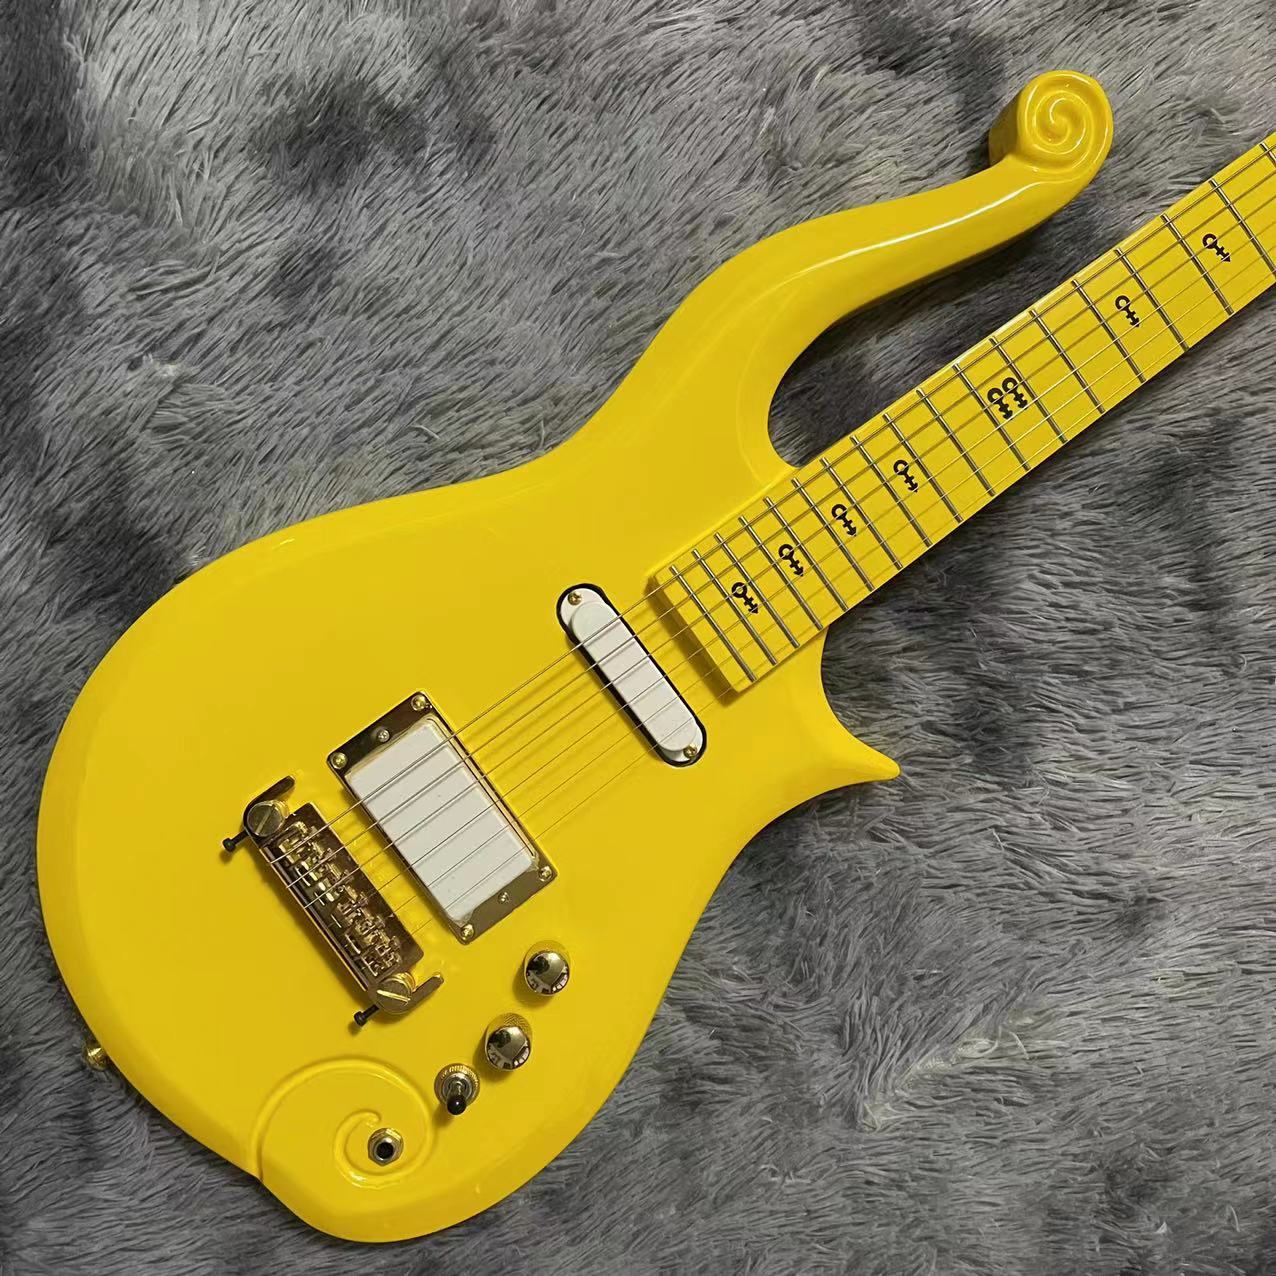 Özel Akçaağaç Klavye Boyun Maun Vücut Prens Cloud Elektro Gitar Sarı Renkli